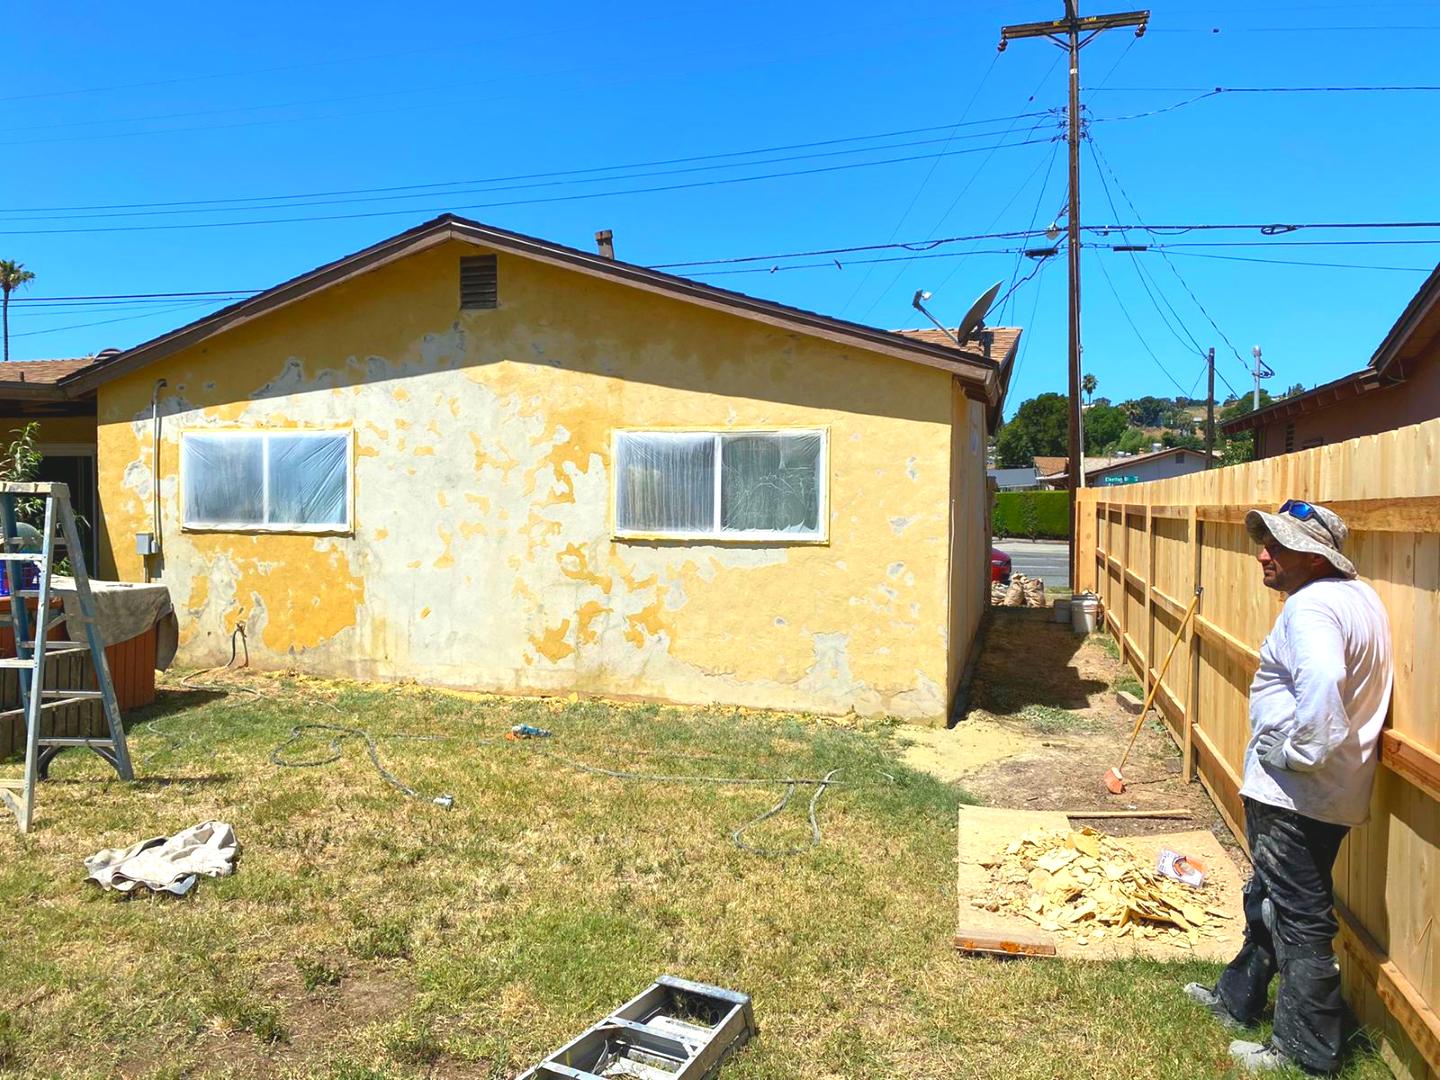 ﻿﻿﻿House Painting Job in Progress in Mira Mesa 92126